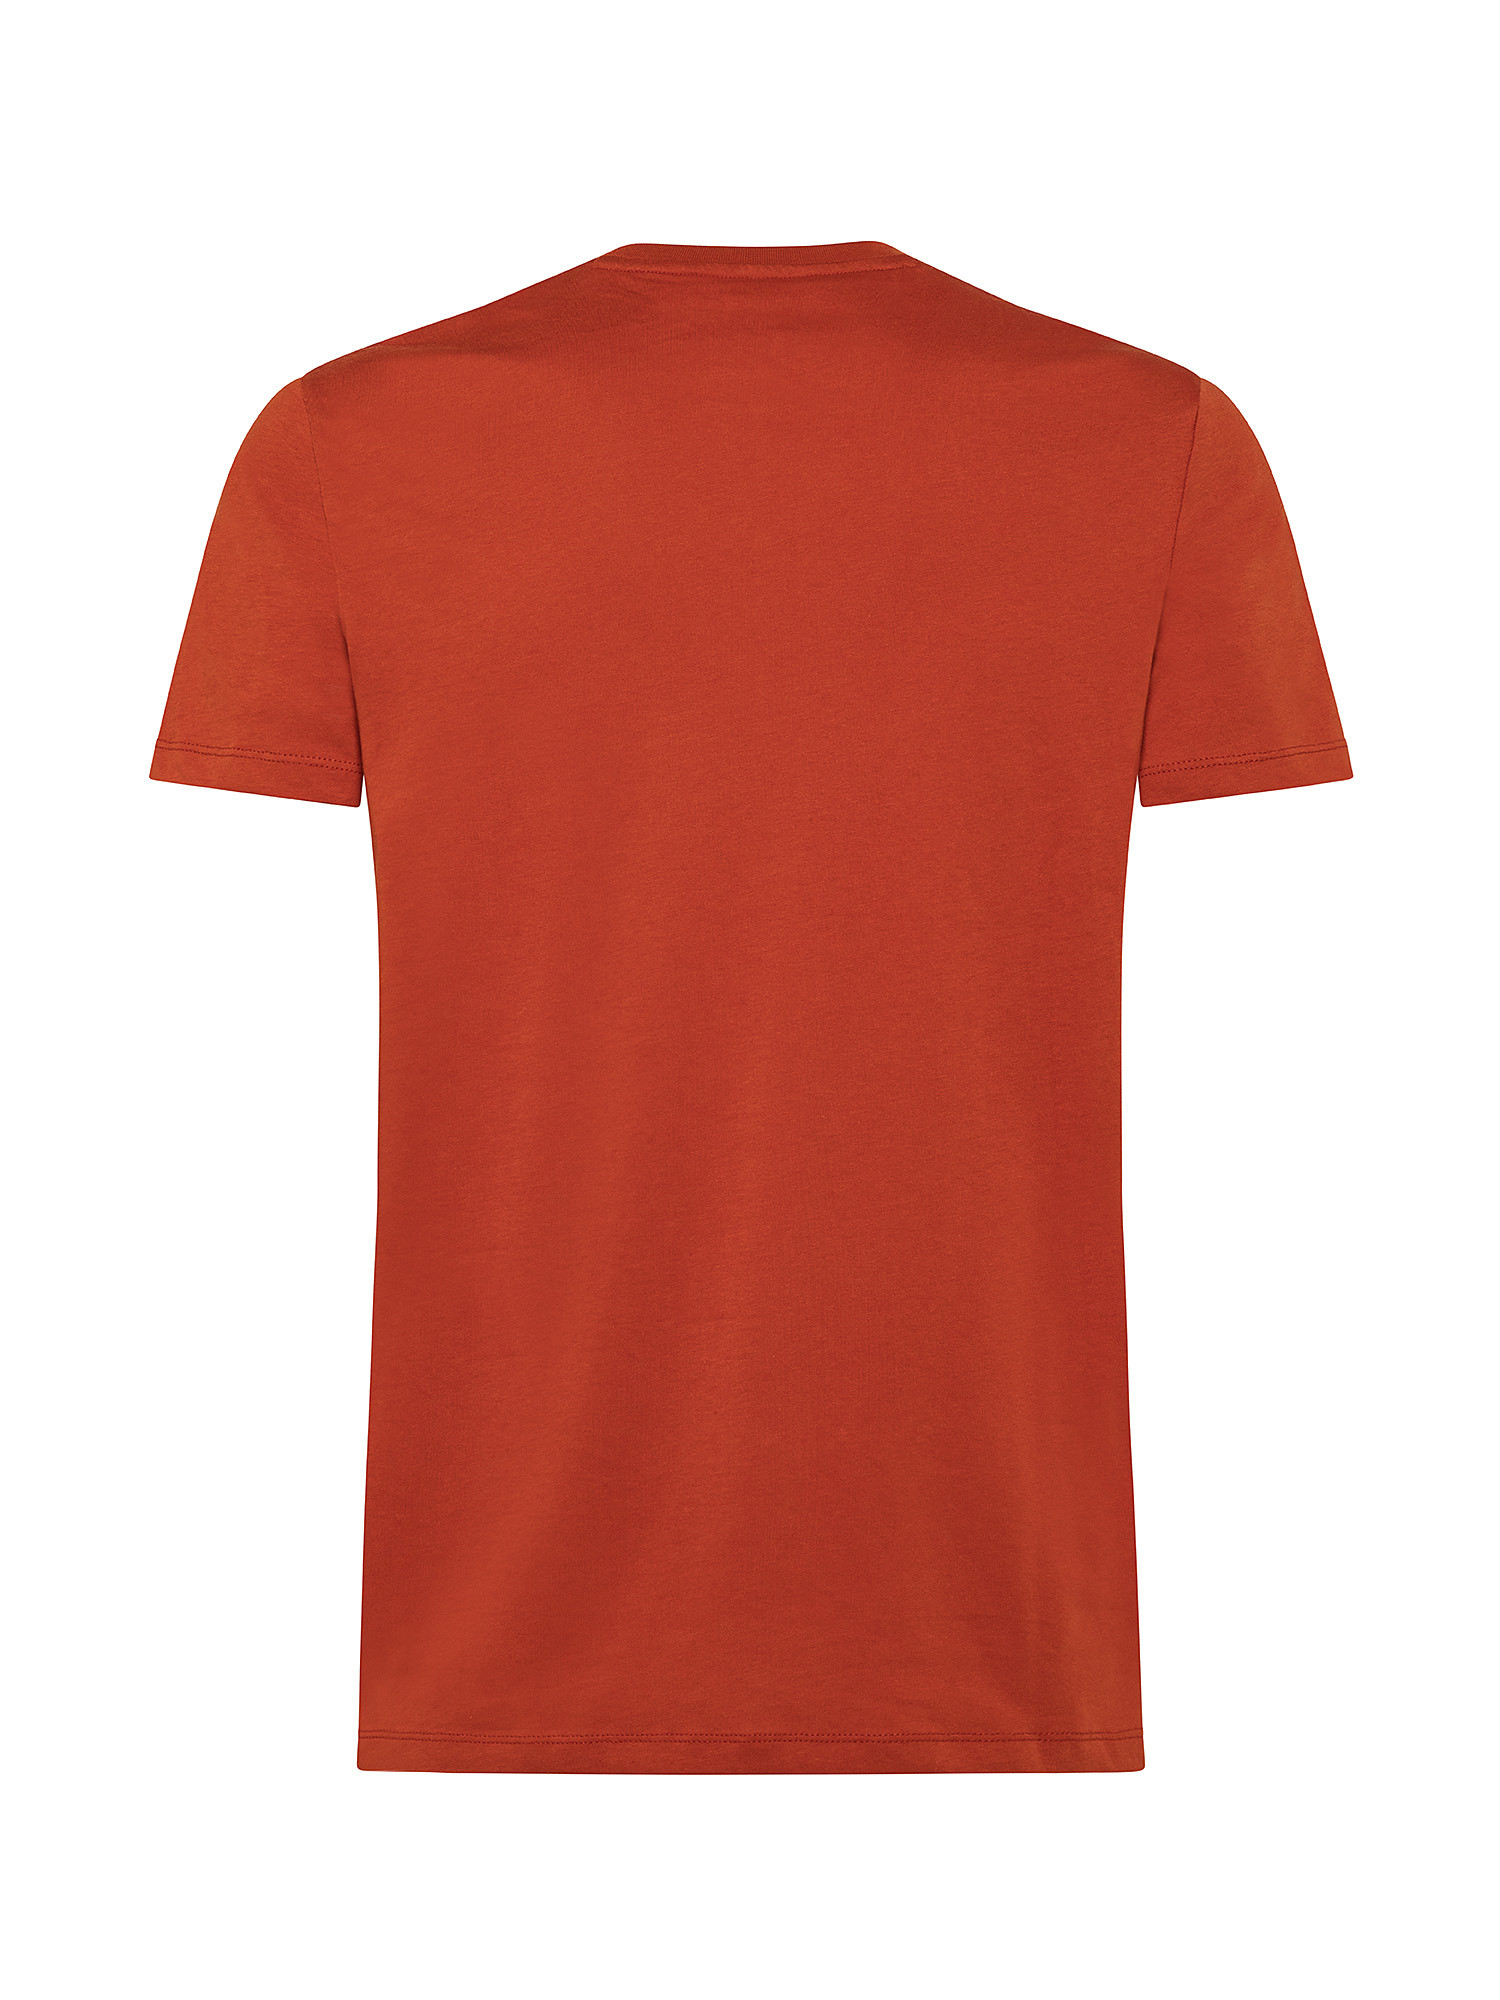 T-shirt, Arancione, large image number 1